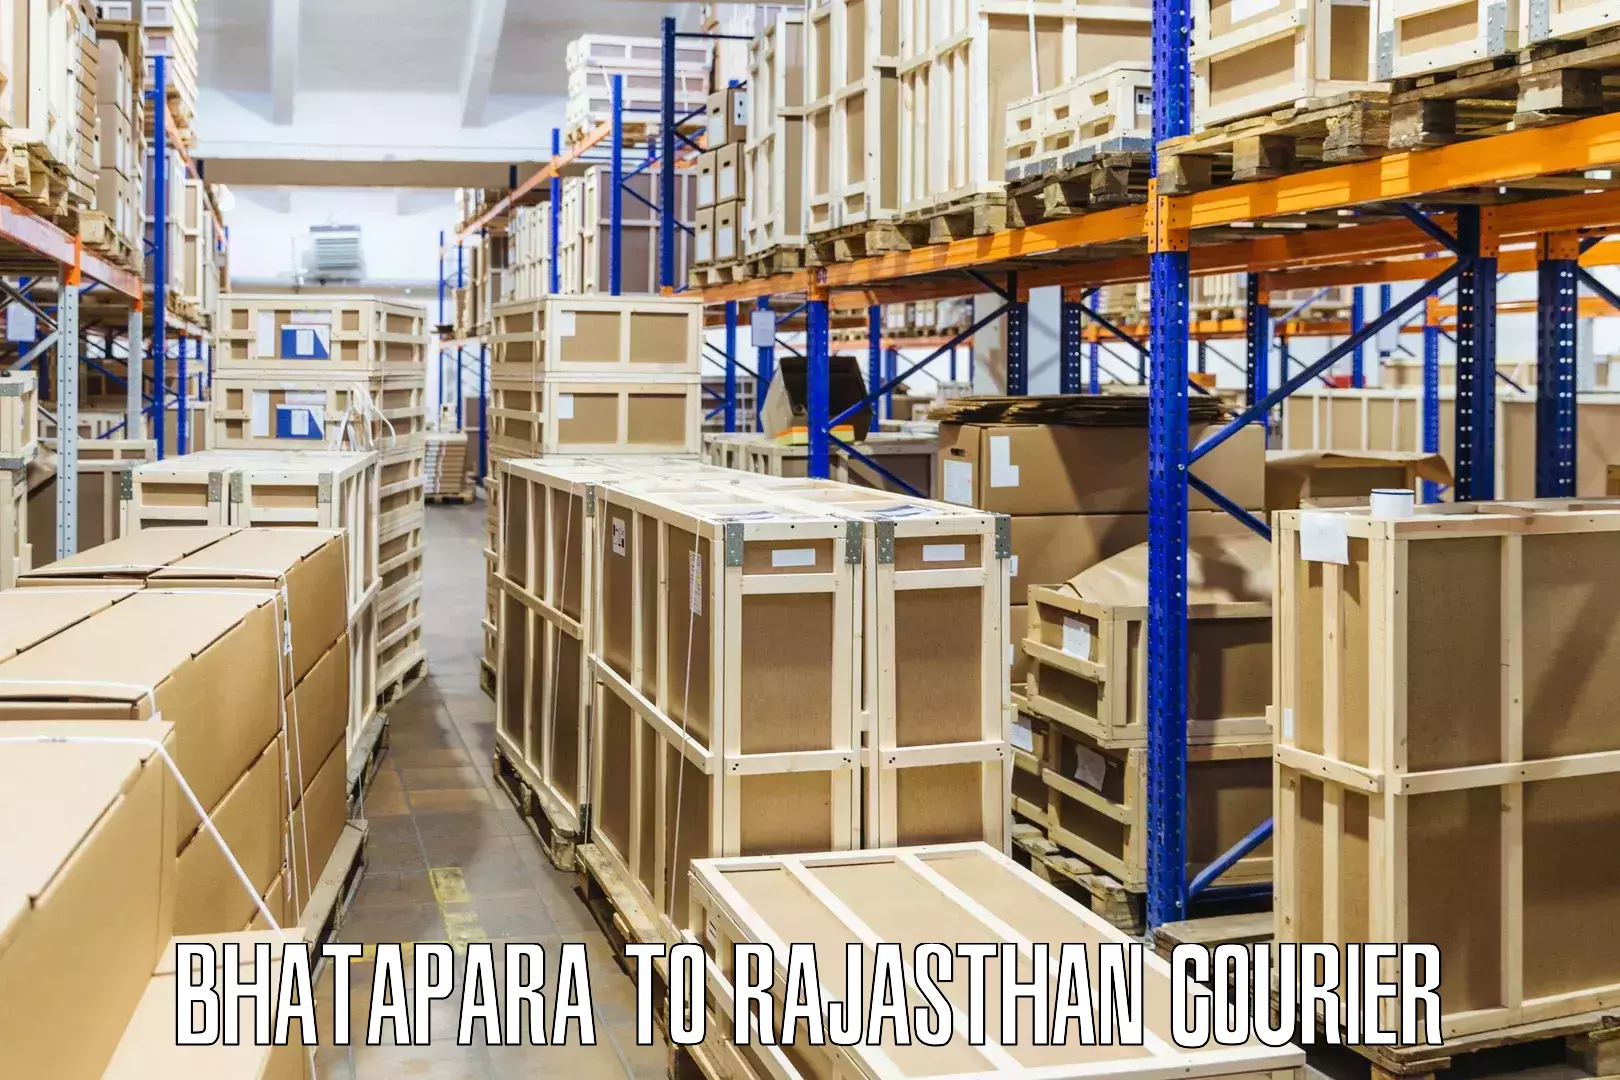 Logistics service provider Bhatapara to Bhinder